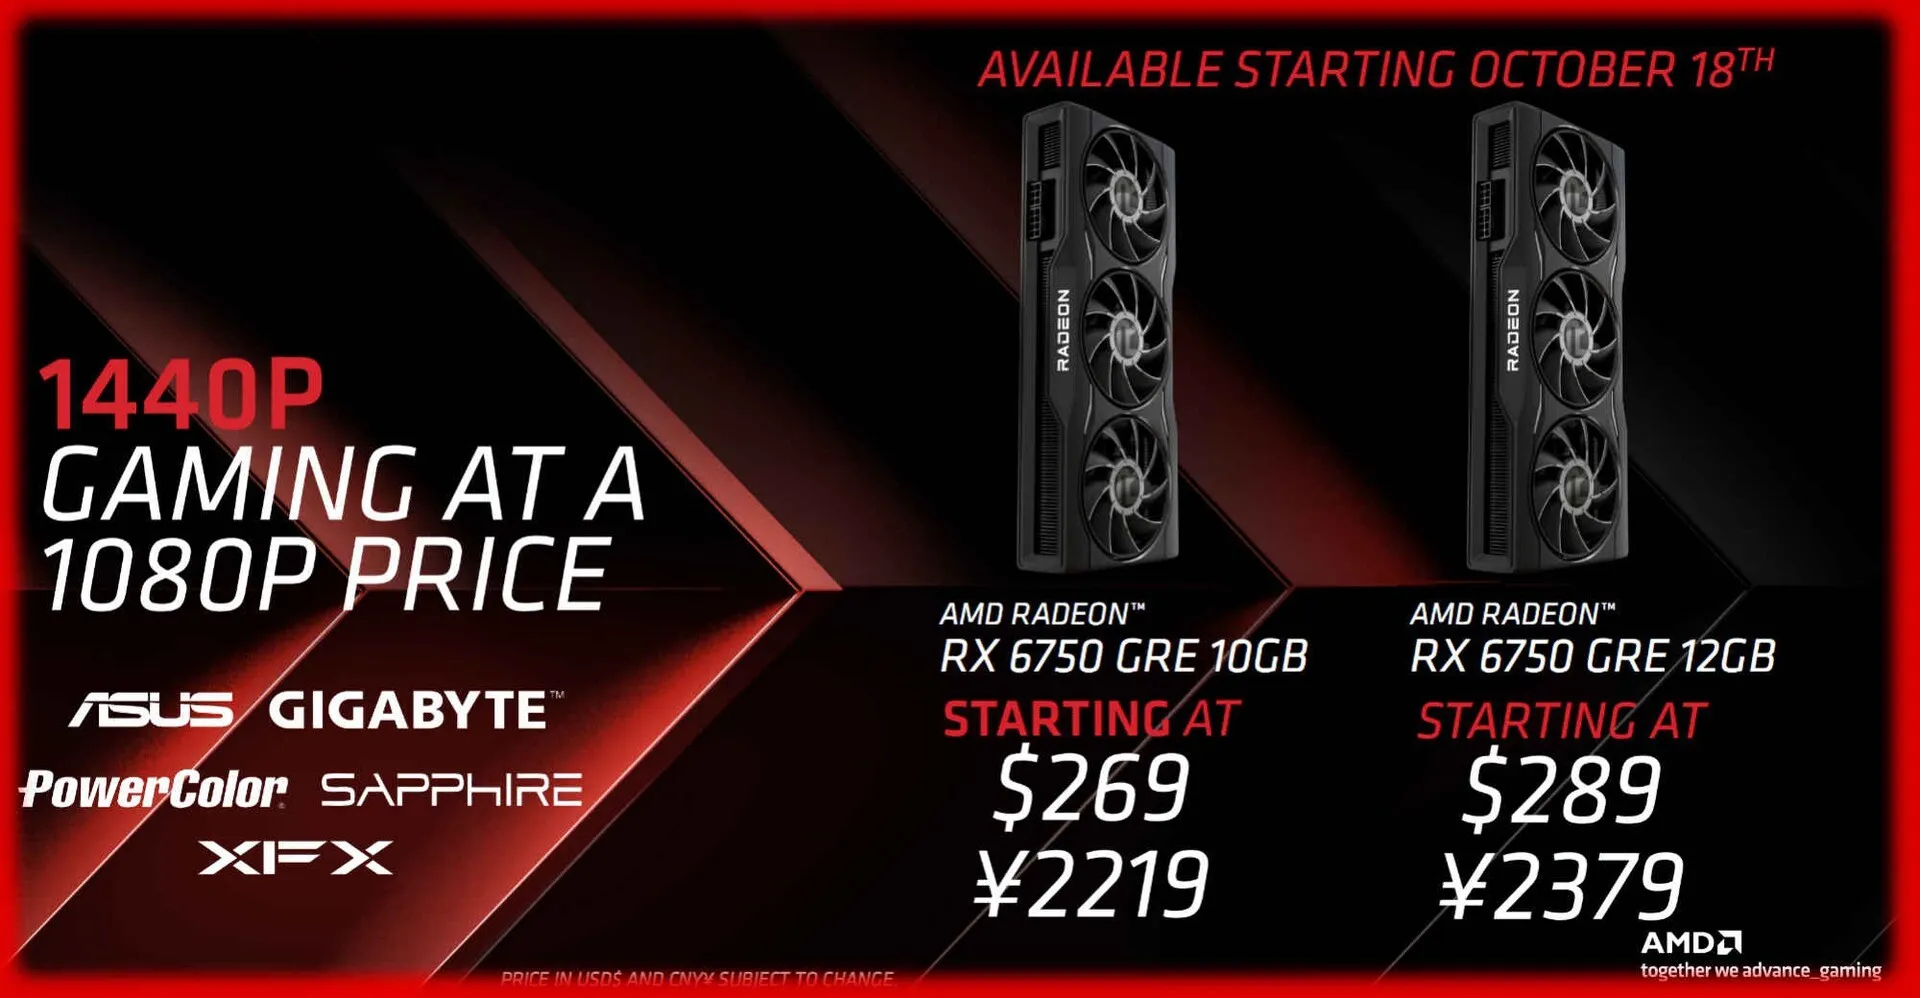 AMD Radeon RX 6750 GRE